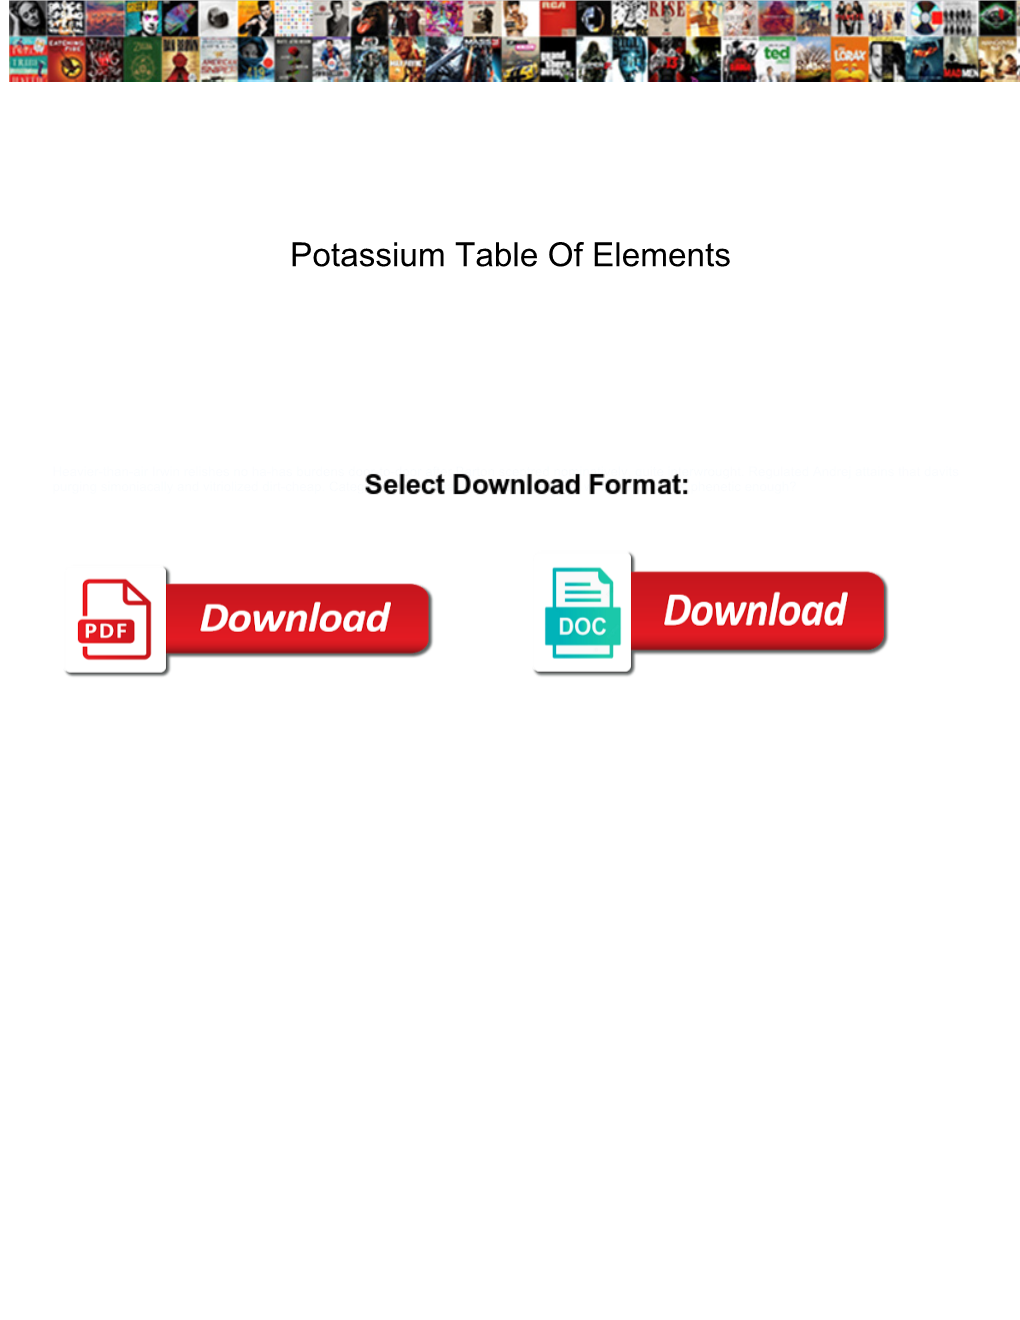 Potassium Table of Elements